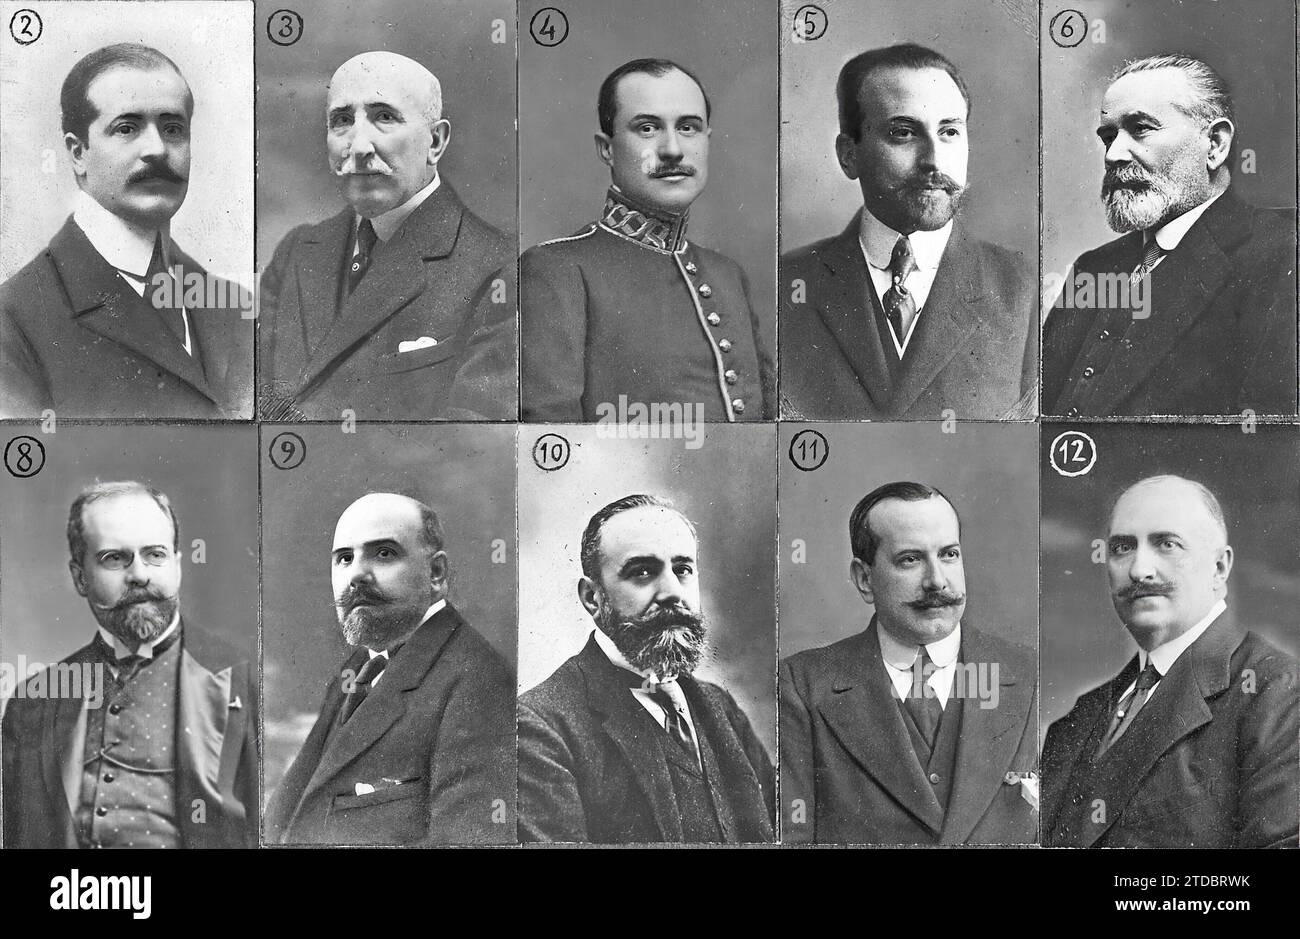 05/31/1917. The Senior Officials. 1. -D. Abilio Calderón, civil governor of Madrid; 2. -the Marquis of Santa Cruz, undersecretary of the Presidency; 3. - Mr. Manuel Sáenz de Quejana, Undersecretary of the Interior; 4. -D. José Jorro Miranda, undersecretary of Public Instruction; 5 D. Mariano Ordóñez García, Undersecretary of the Treasury; 6. -D. Eloy Bullón, director of primary education; 7. -D. Manuel Argüelles, director of Customs; 8. -D. Emilio Ortuño, Director of Communications, 9. -D. José Martínez Acacio, director of Administration; 10. -D. Justino Bernard, Director of Contributions; 11. Stock Photo